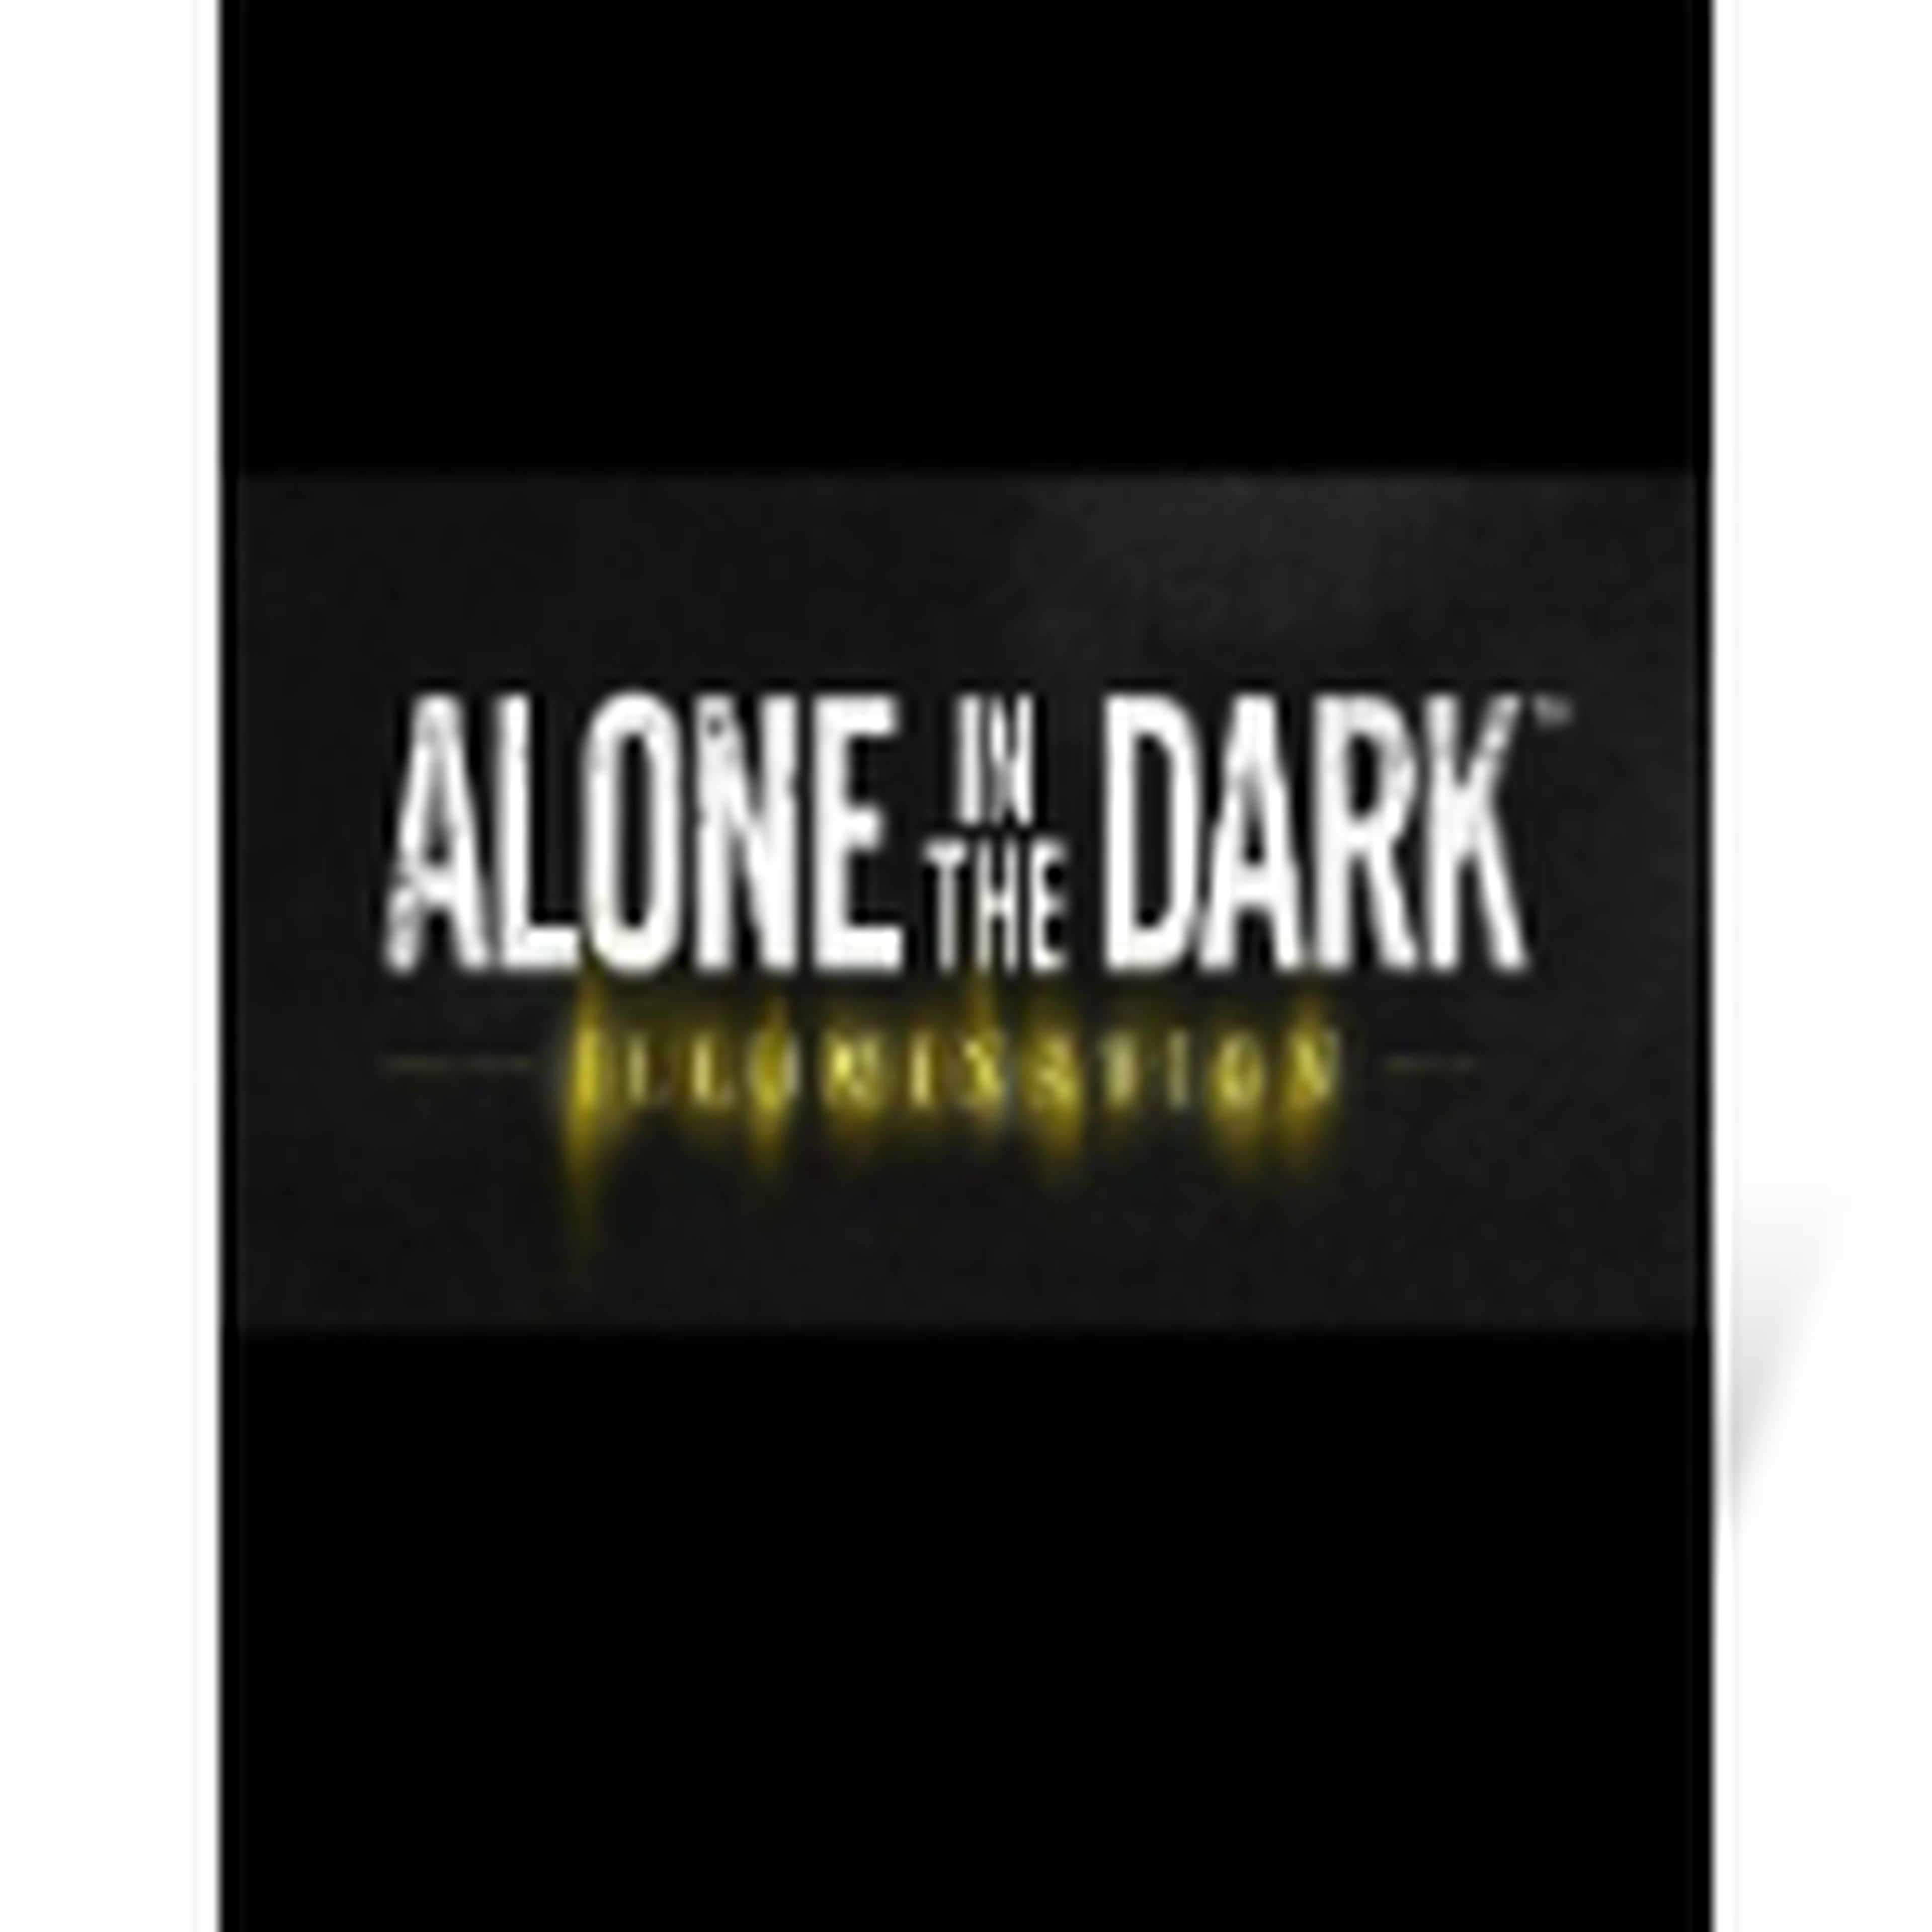 Alone in the Dark Illumination para PC